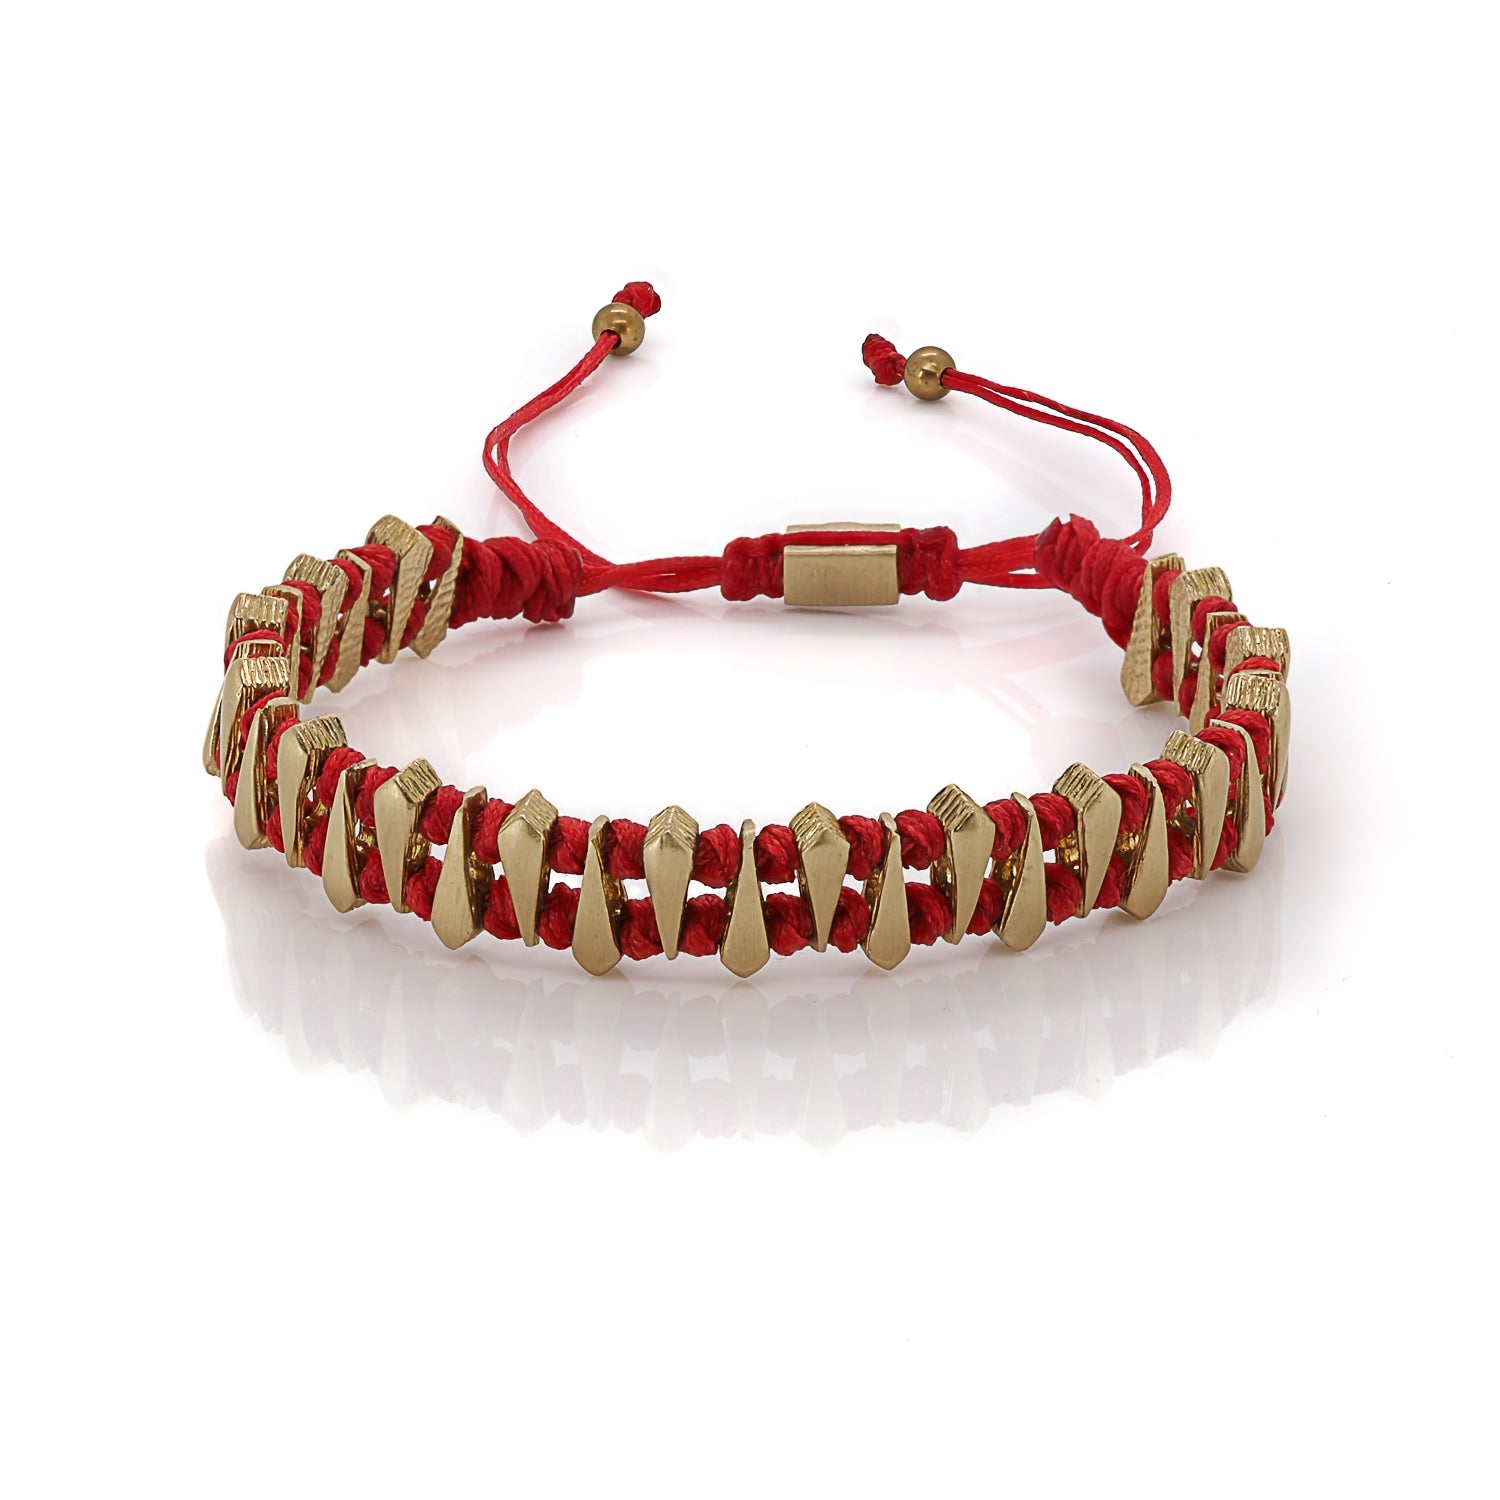 Fortune Red Woven Unisex Bracelet - Adjustable Design, 24K Gold Plated Accents